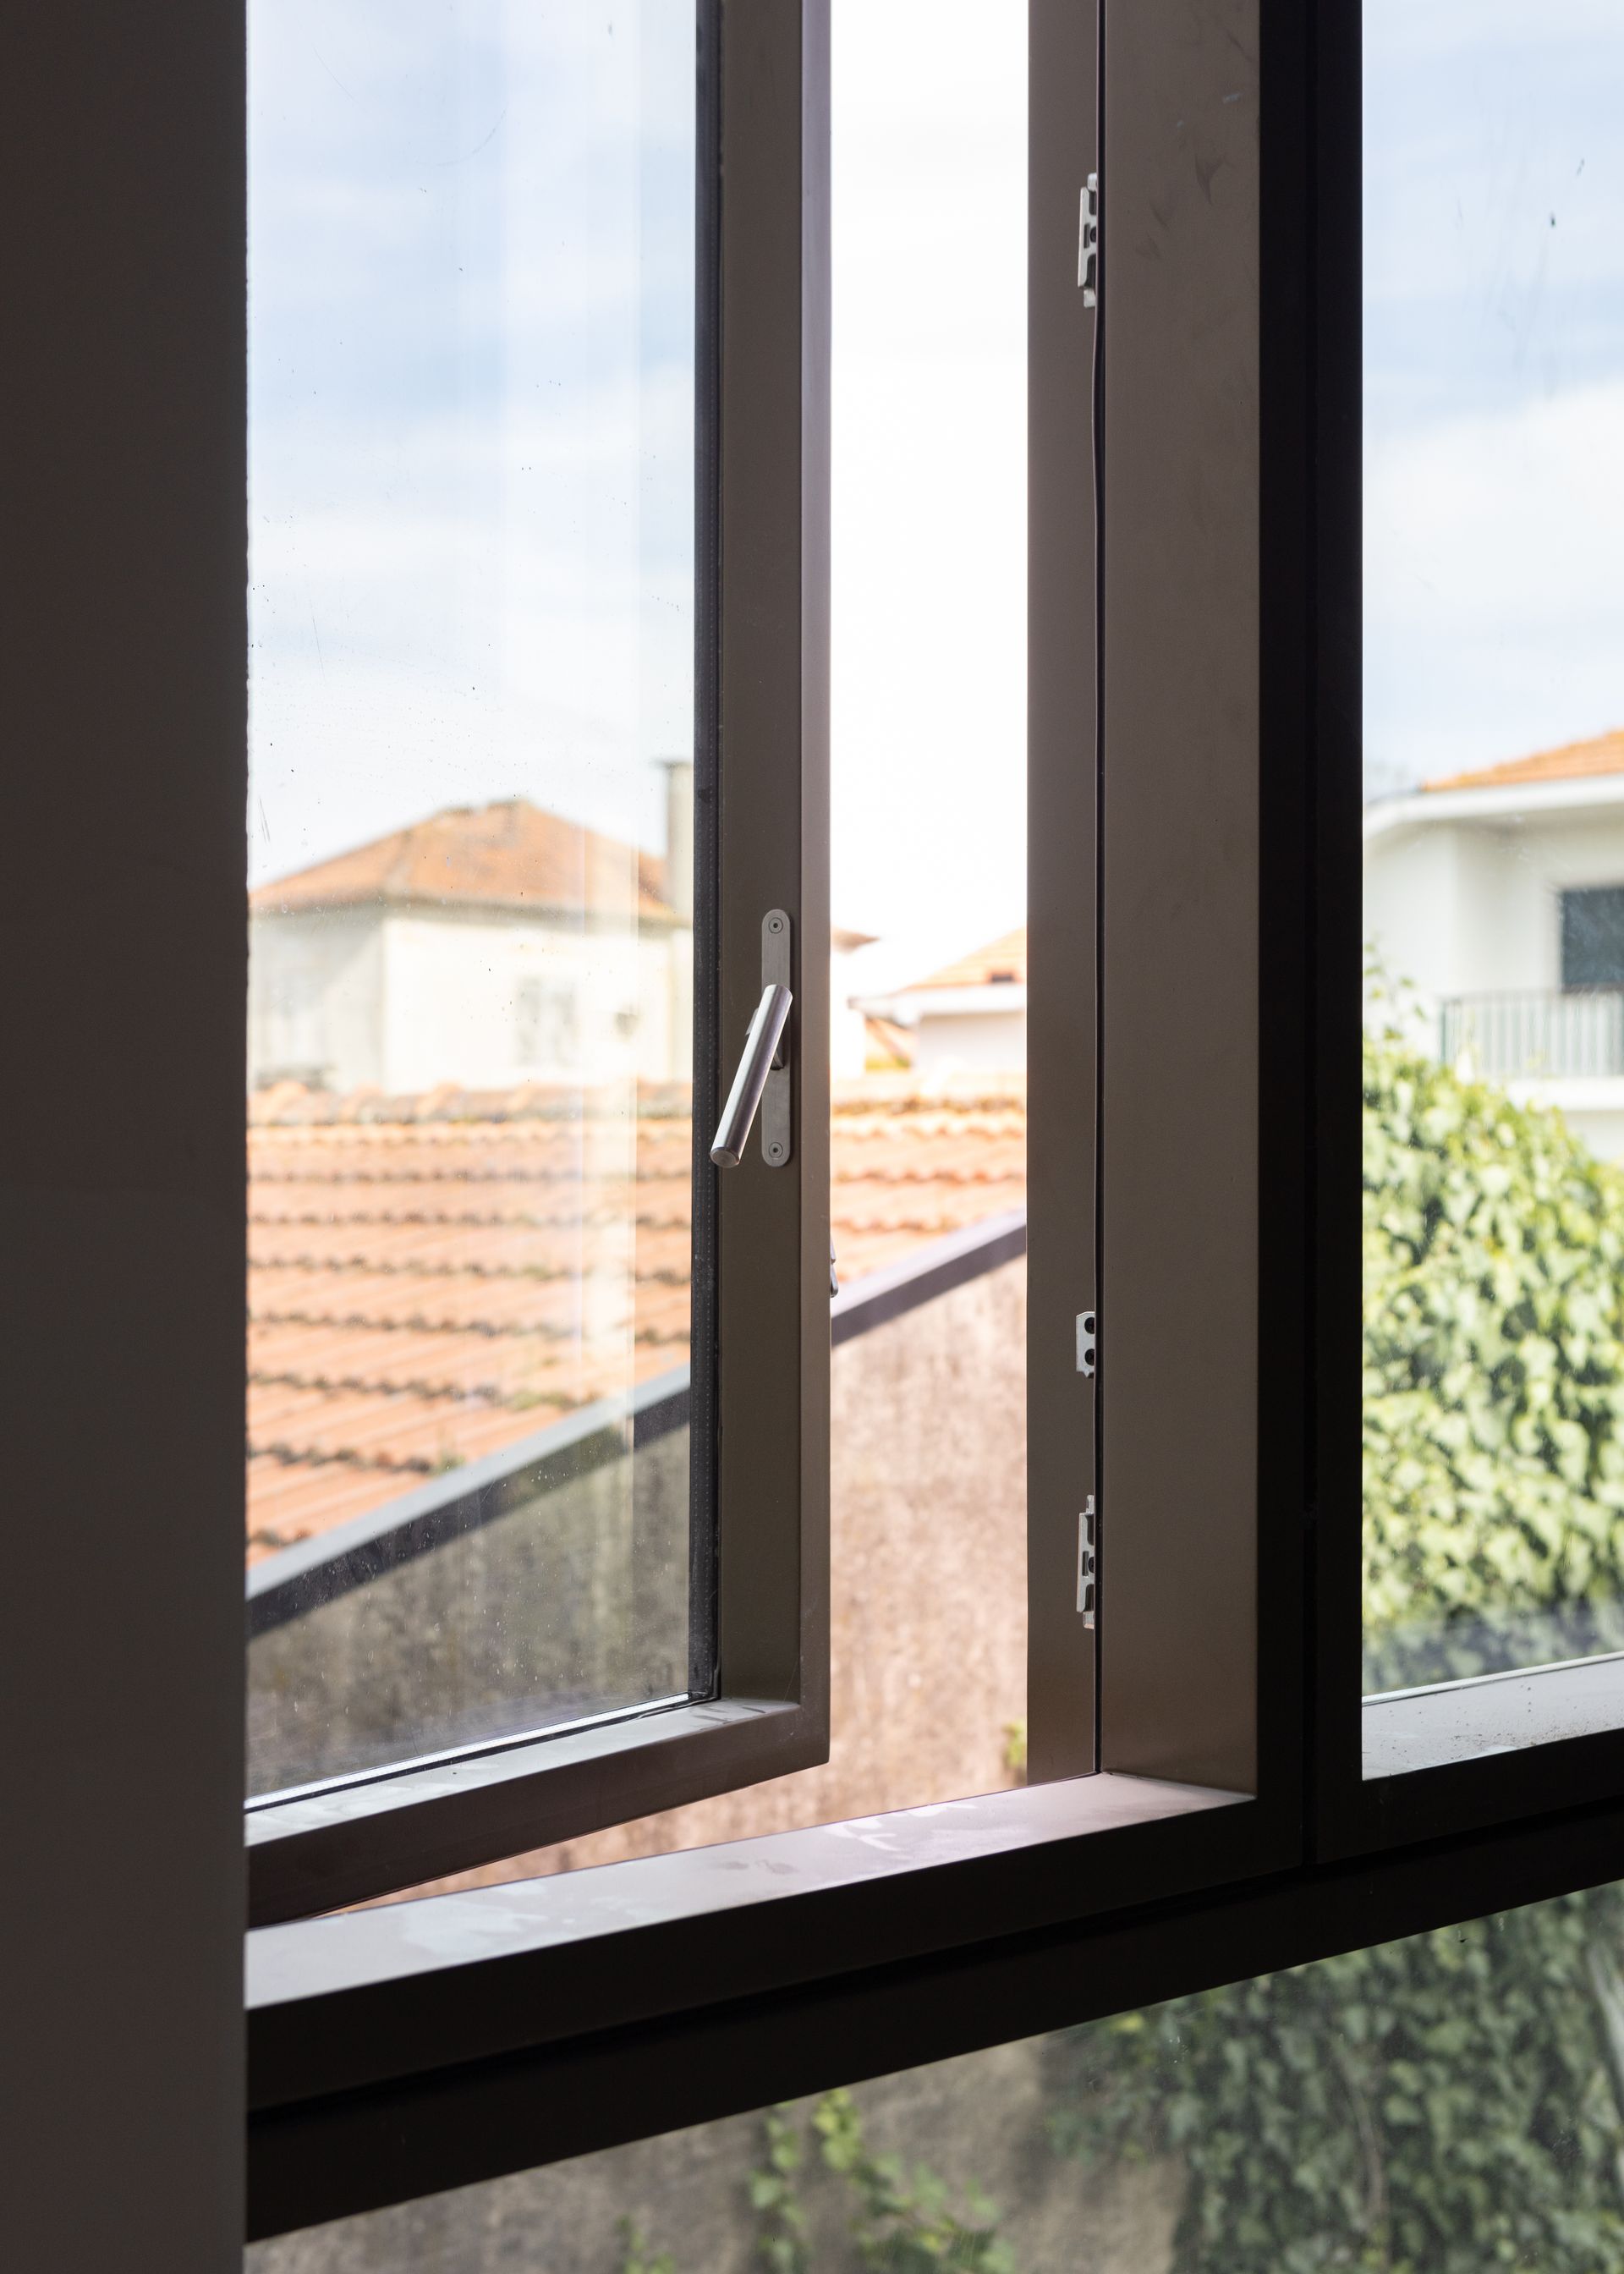 Minimalist frame window combining modern design with minimalist architecture